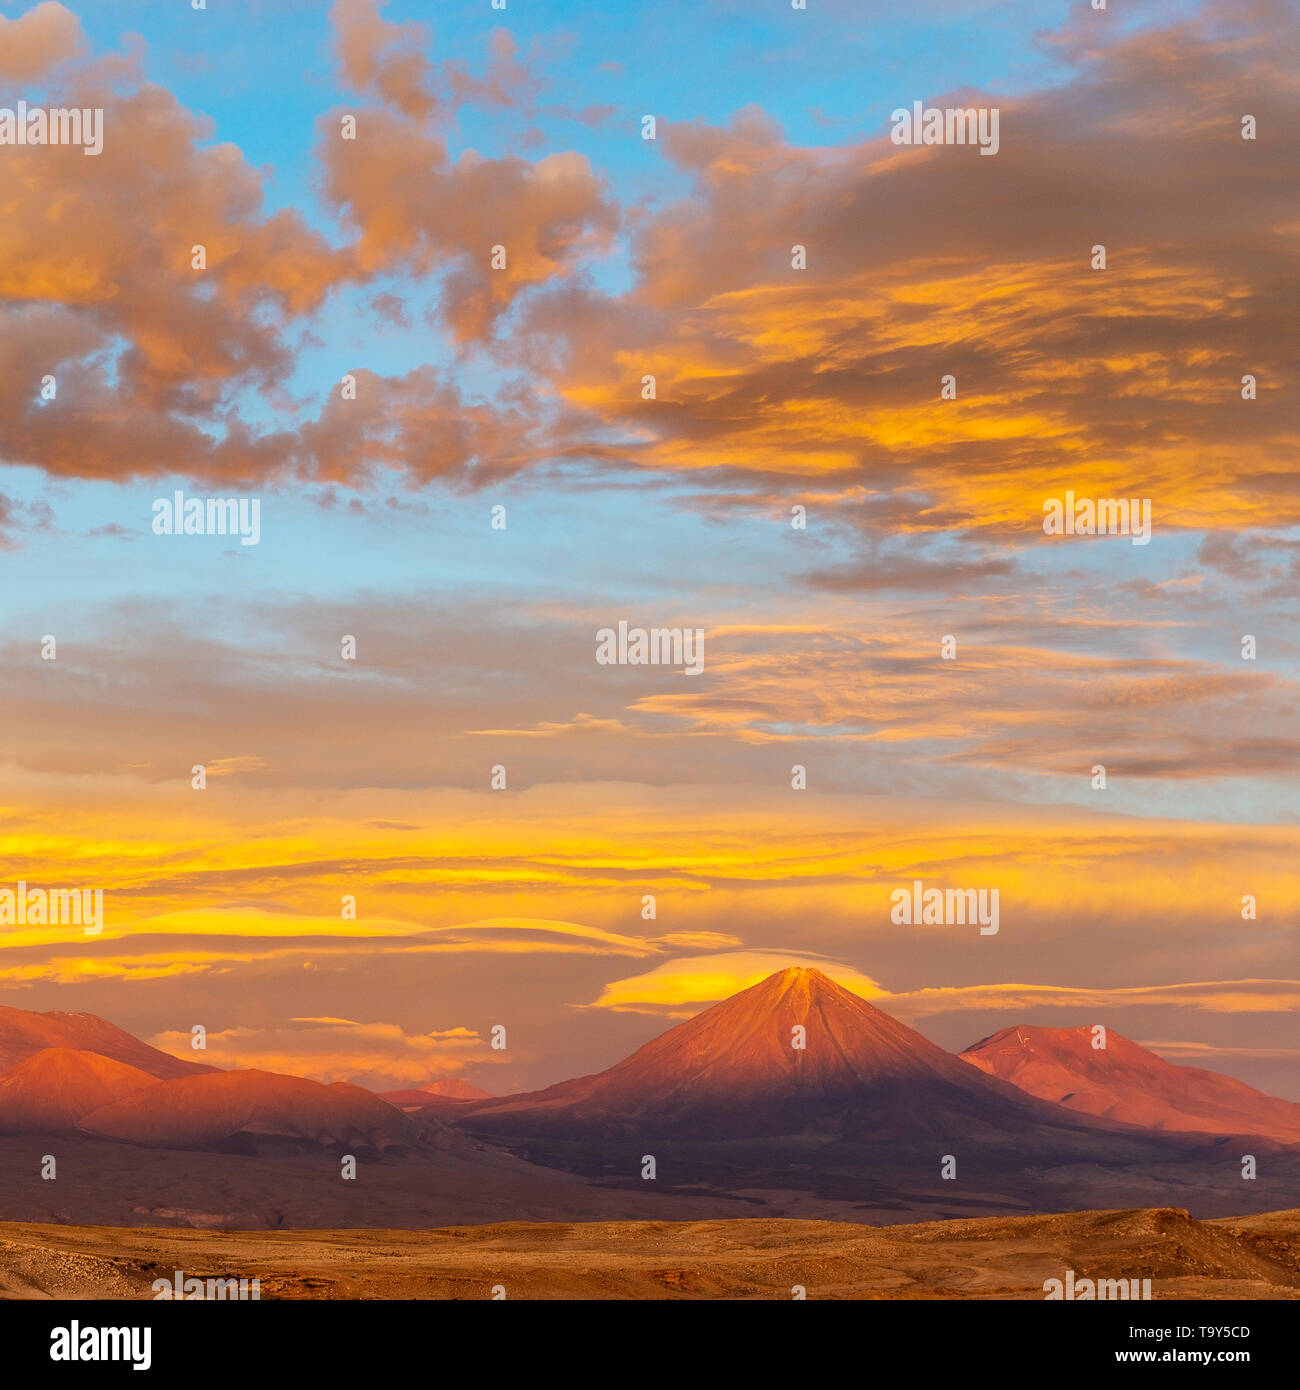 Square photograph of the Licancabur volcano at sunset in the Atacama Desert, Chile, South America. Stock Photo